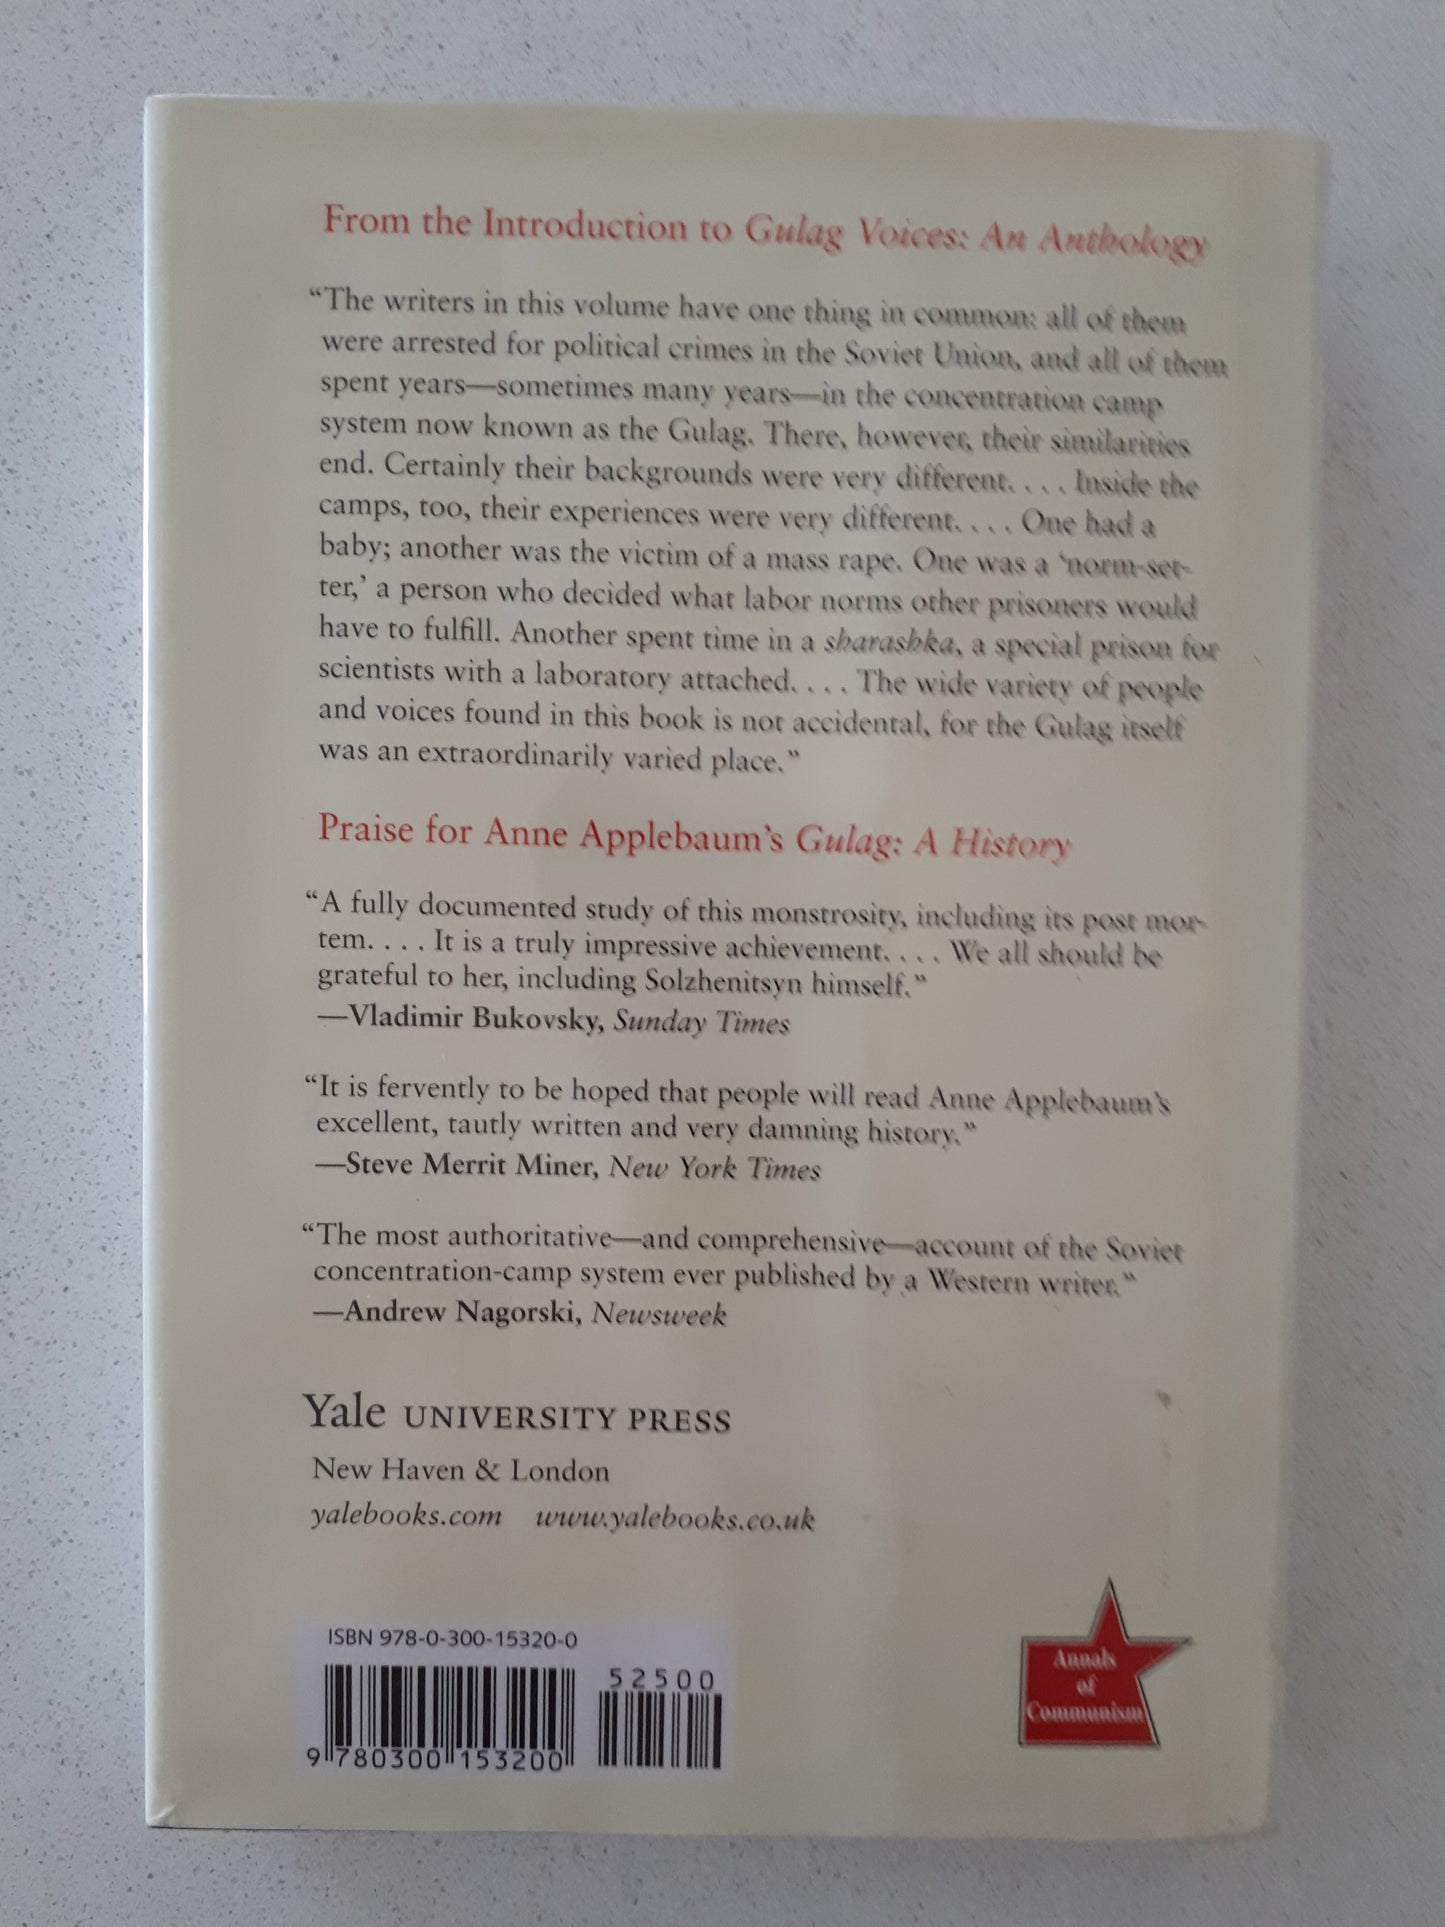 Gulag Voices An Anthology edited by Anne Applebaum